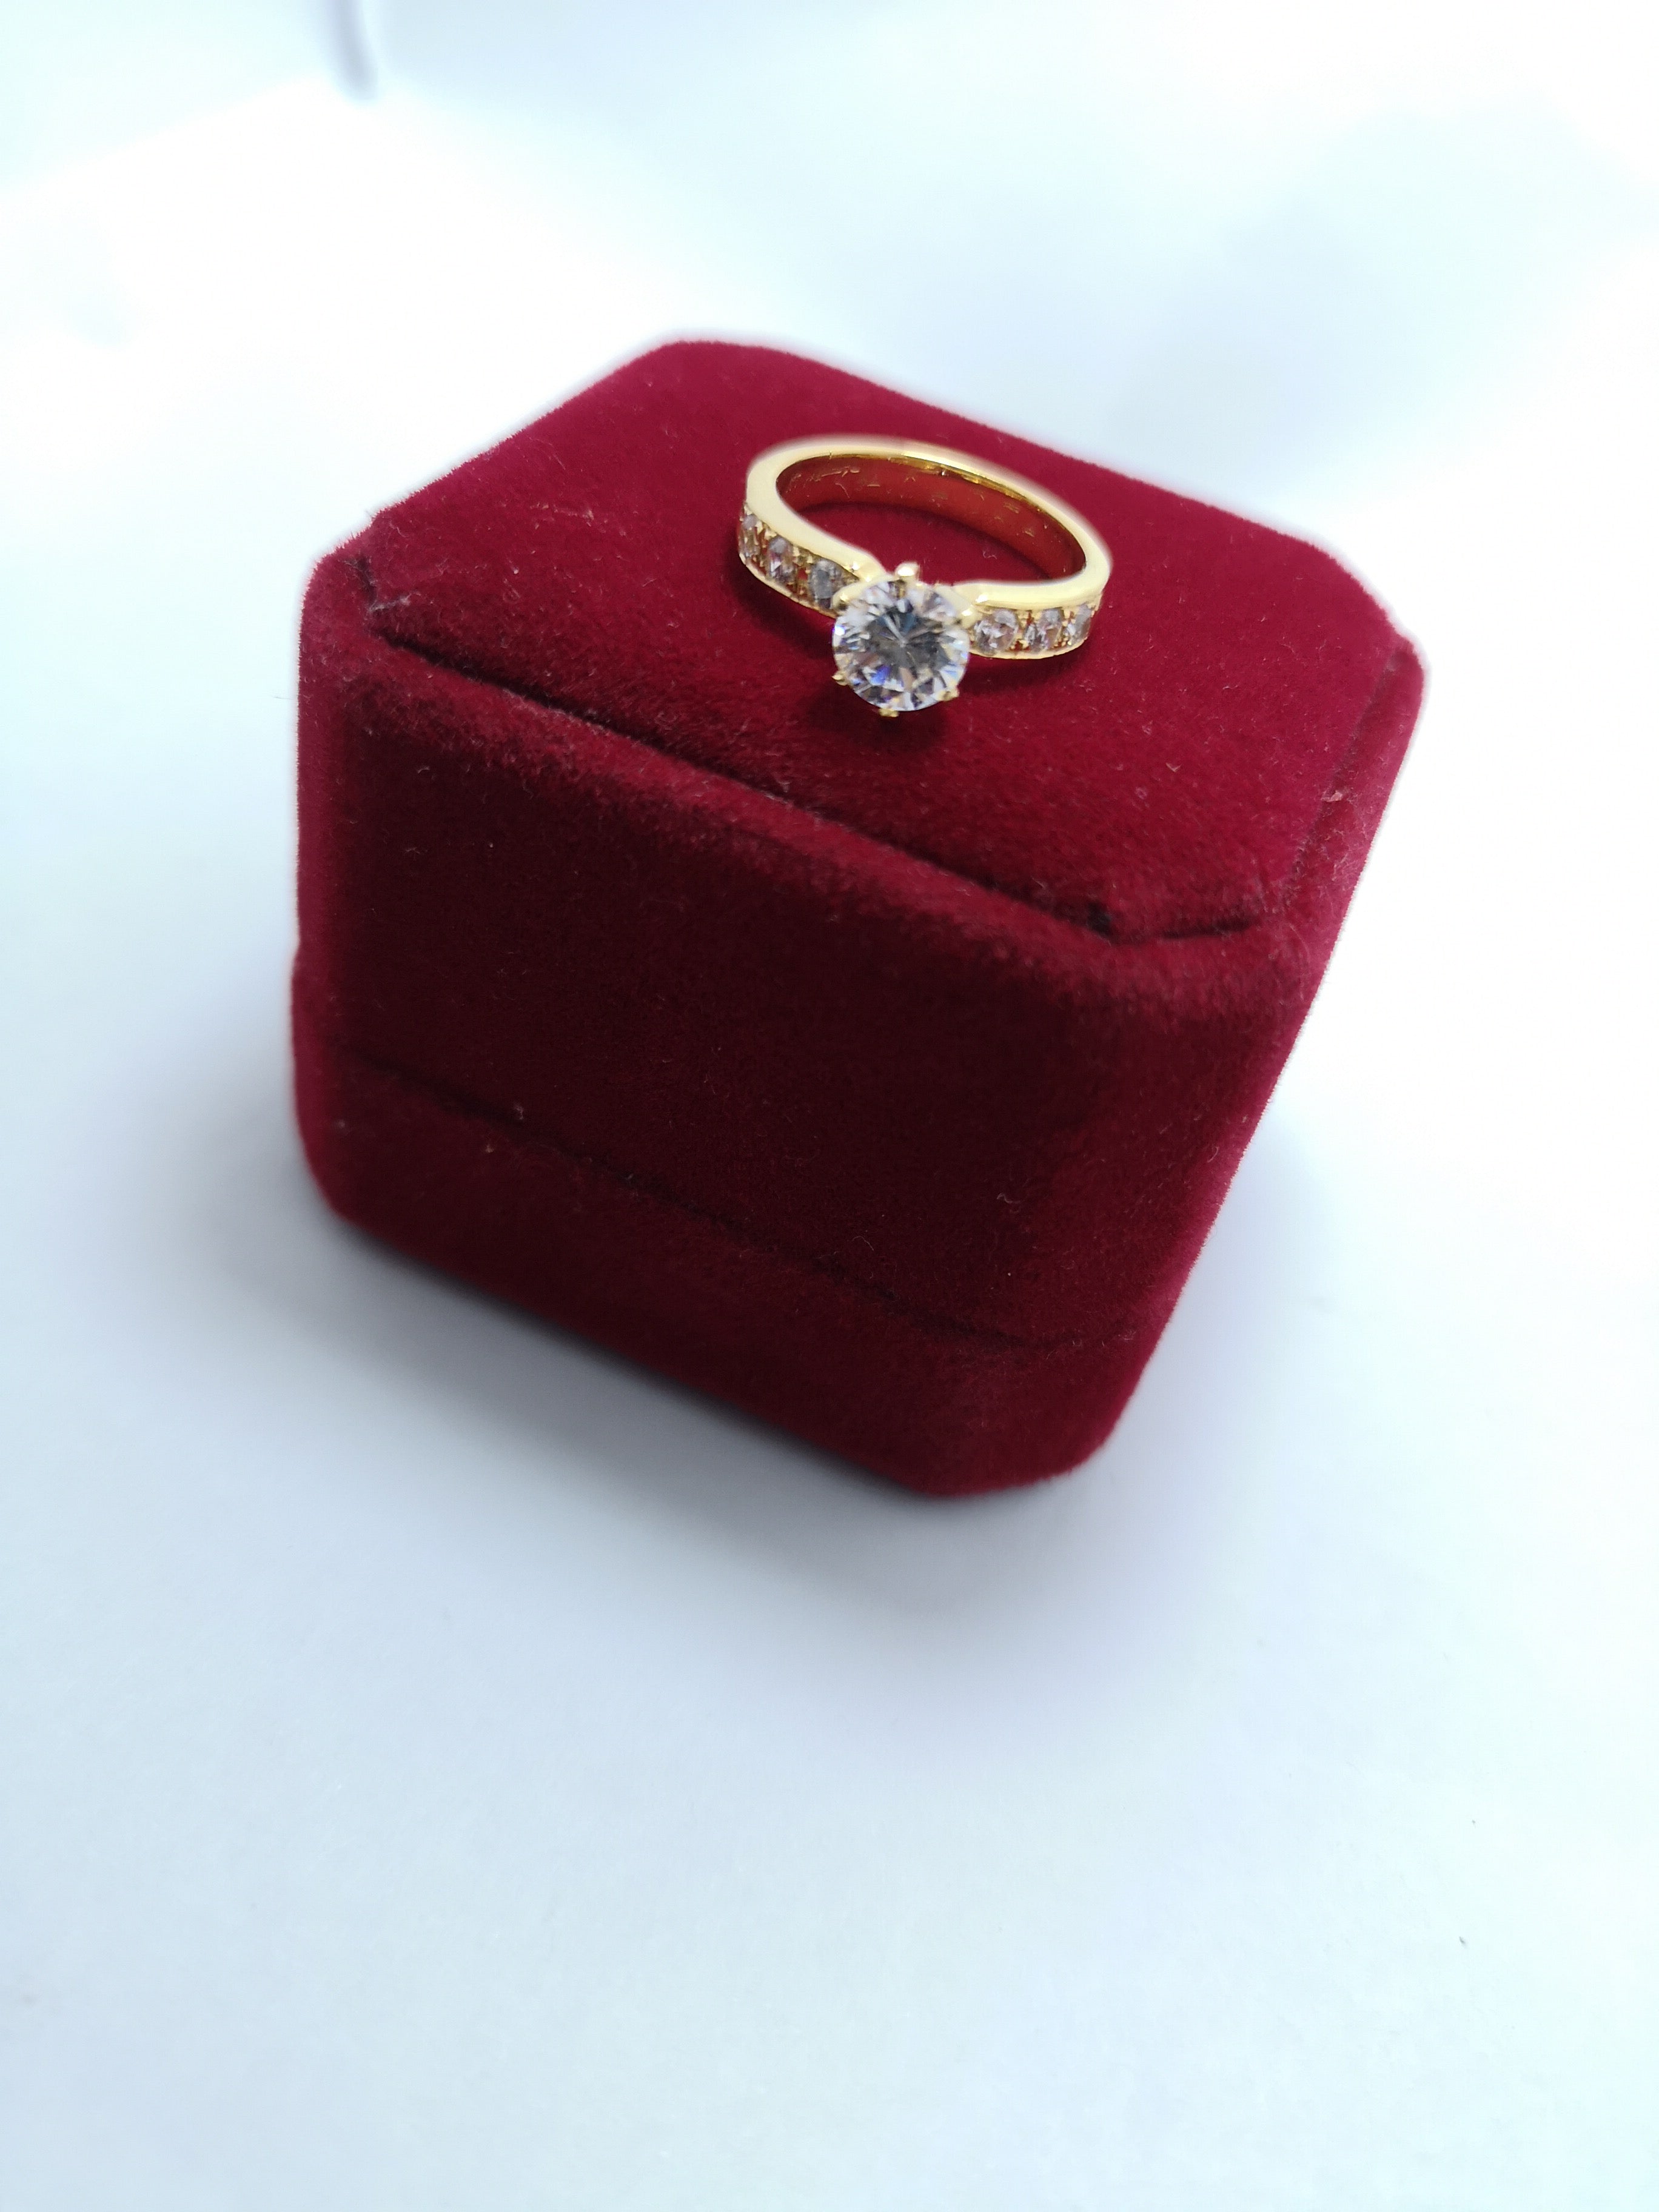 18k yellow gold engagement ring